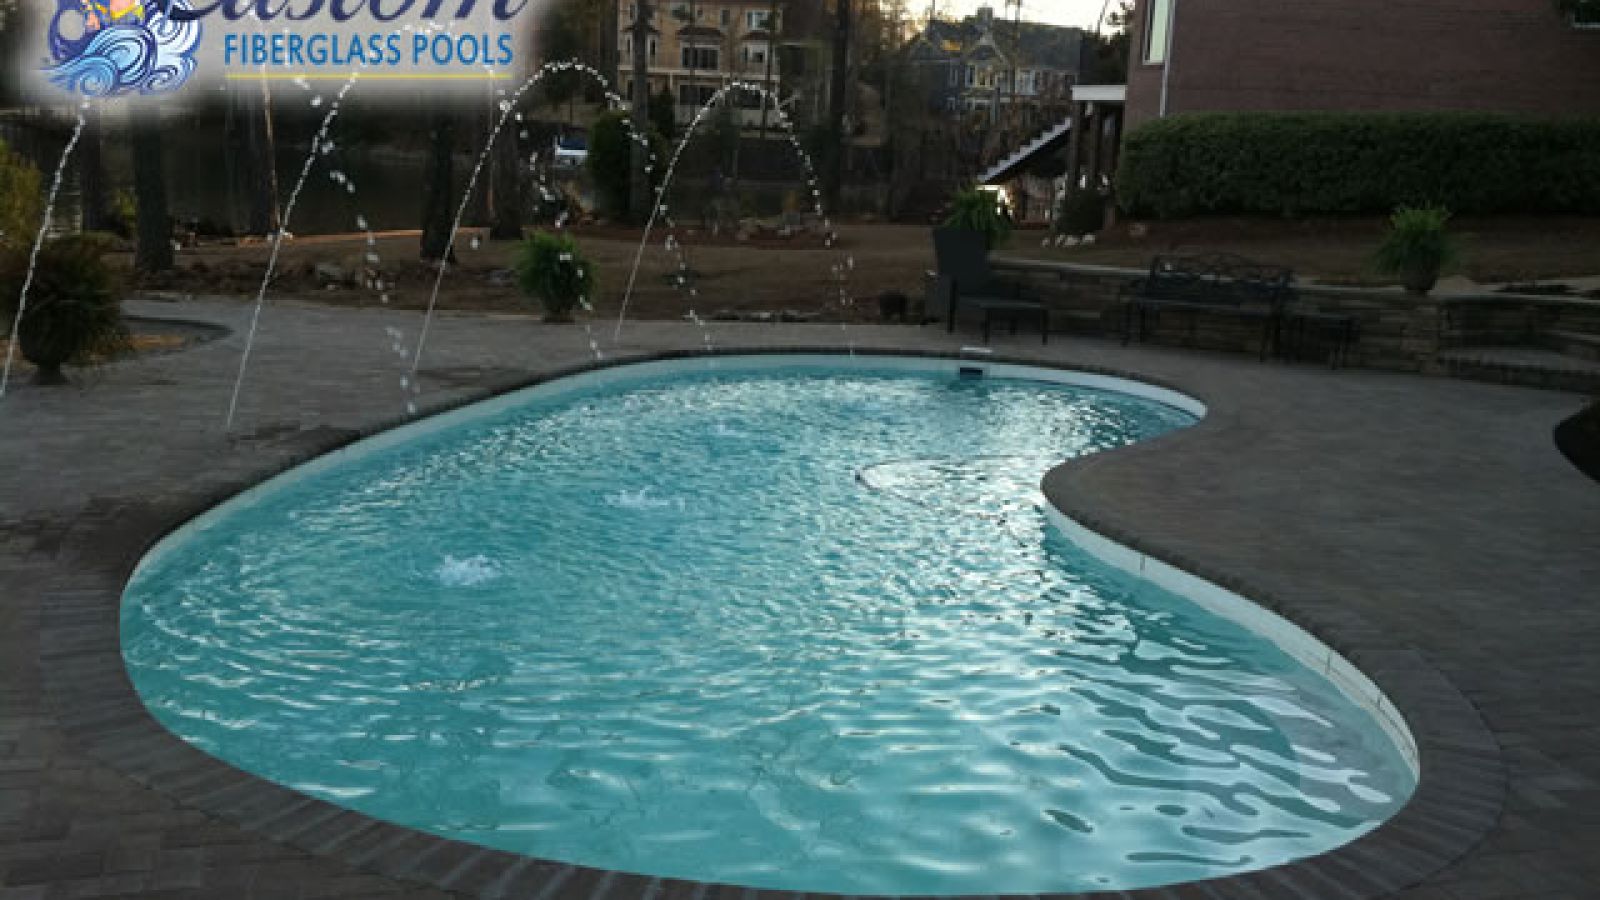 Monterey Kidney Fiberglass Pool bringing cheerful summer vibes to a Clarksville, TN backyard